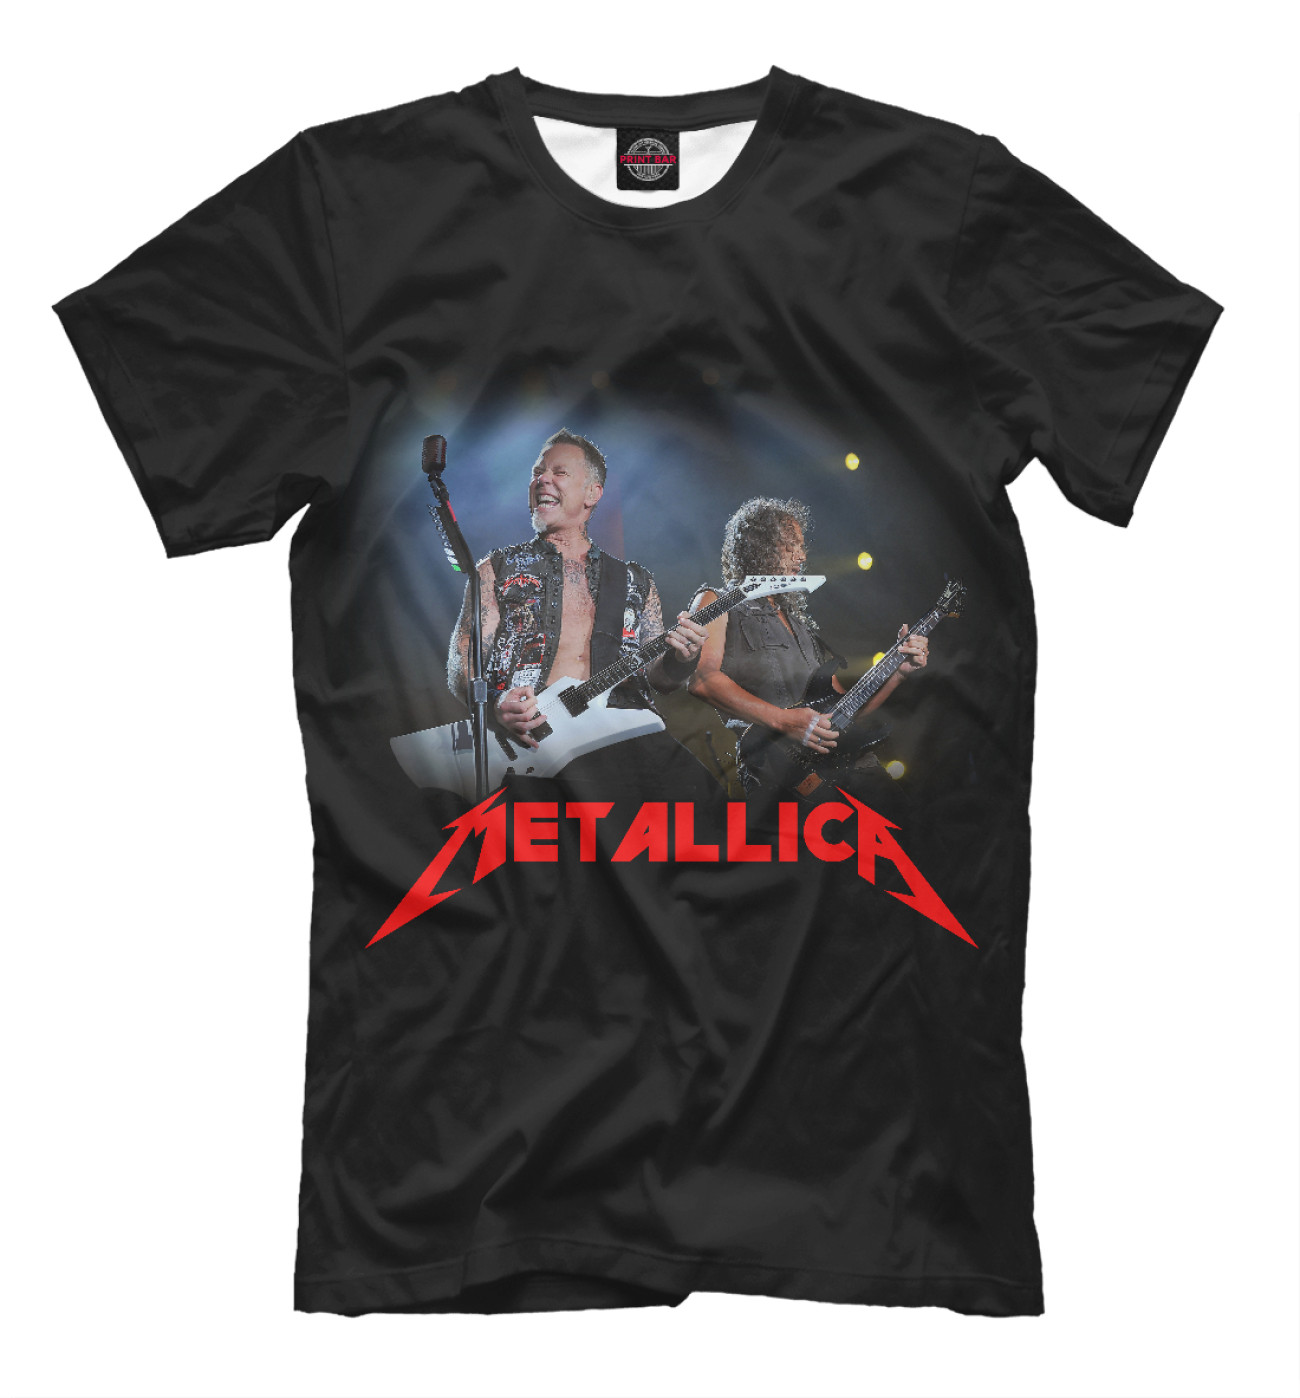 Мужская Футболка Metallica, артикул: MET-291558-fut-2